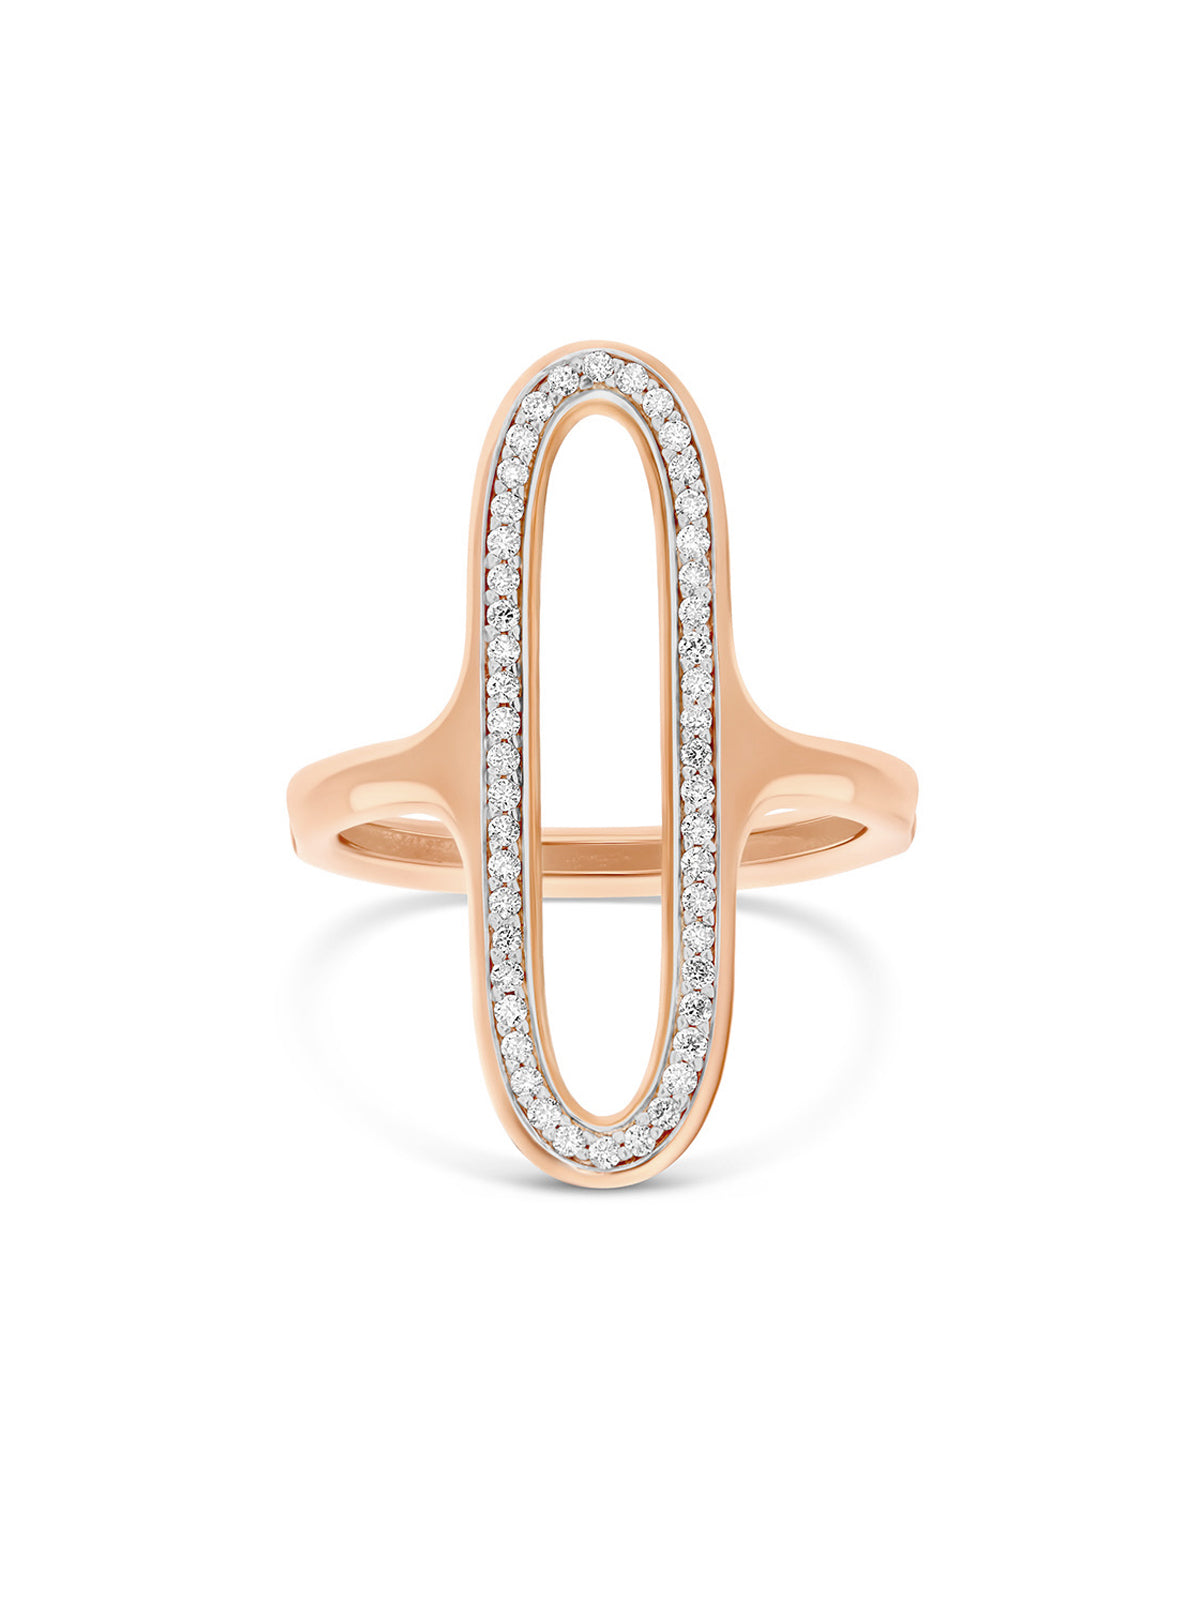 "Libera" rose gold and diamonds big oval signet ring